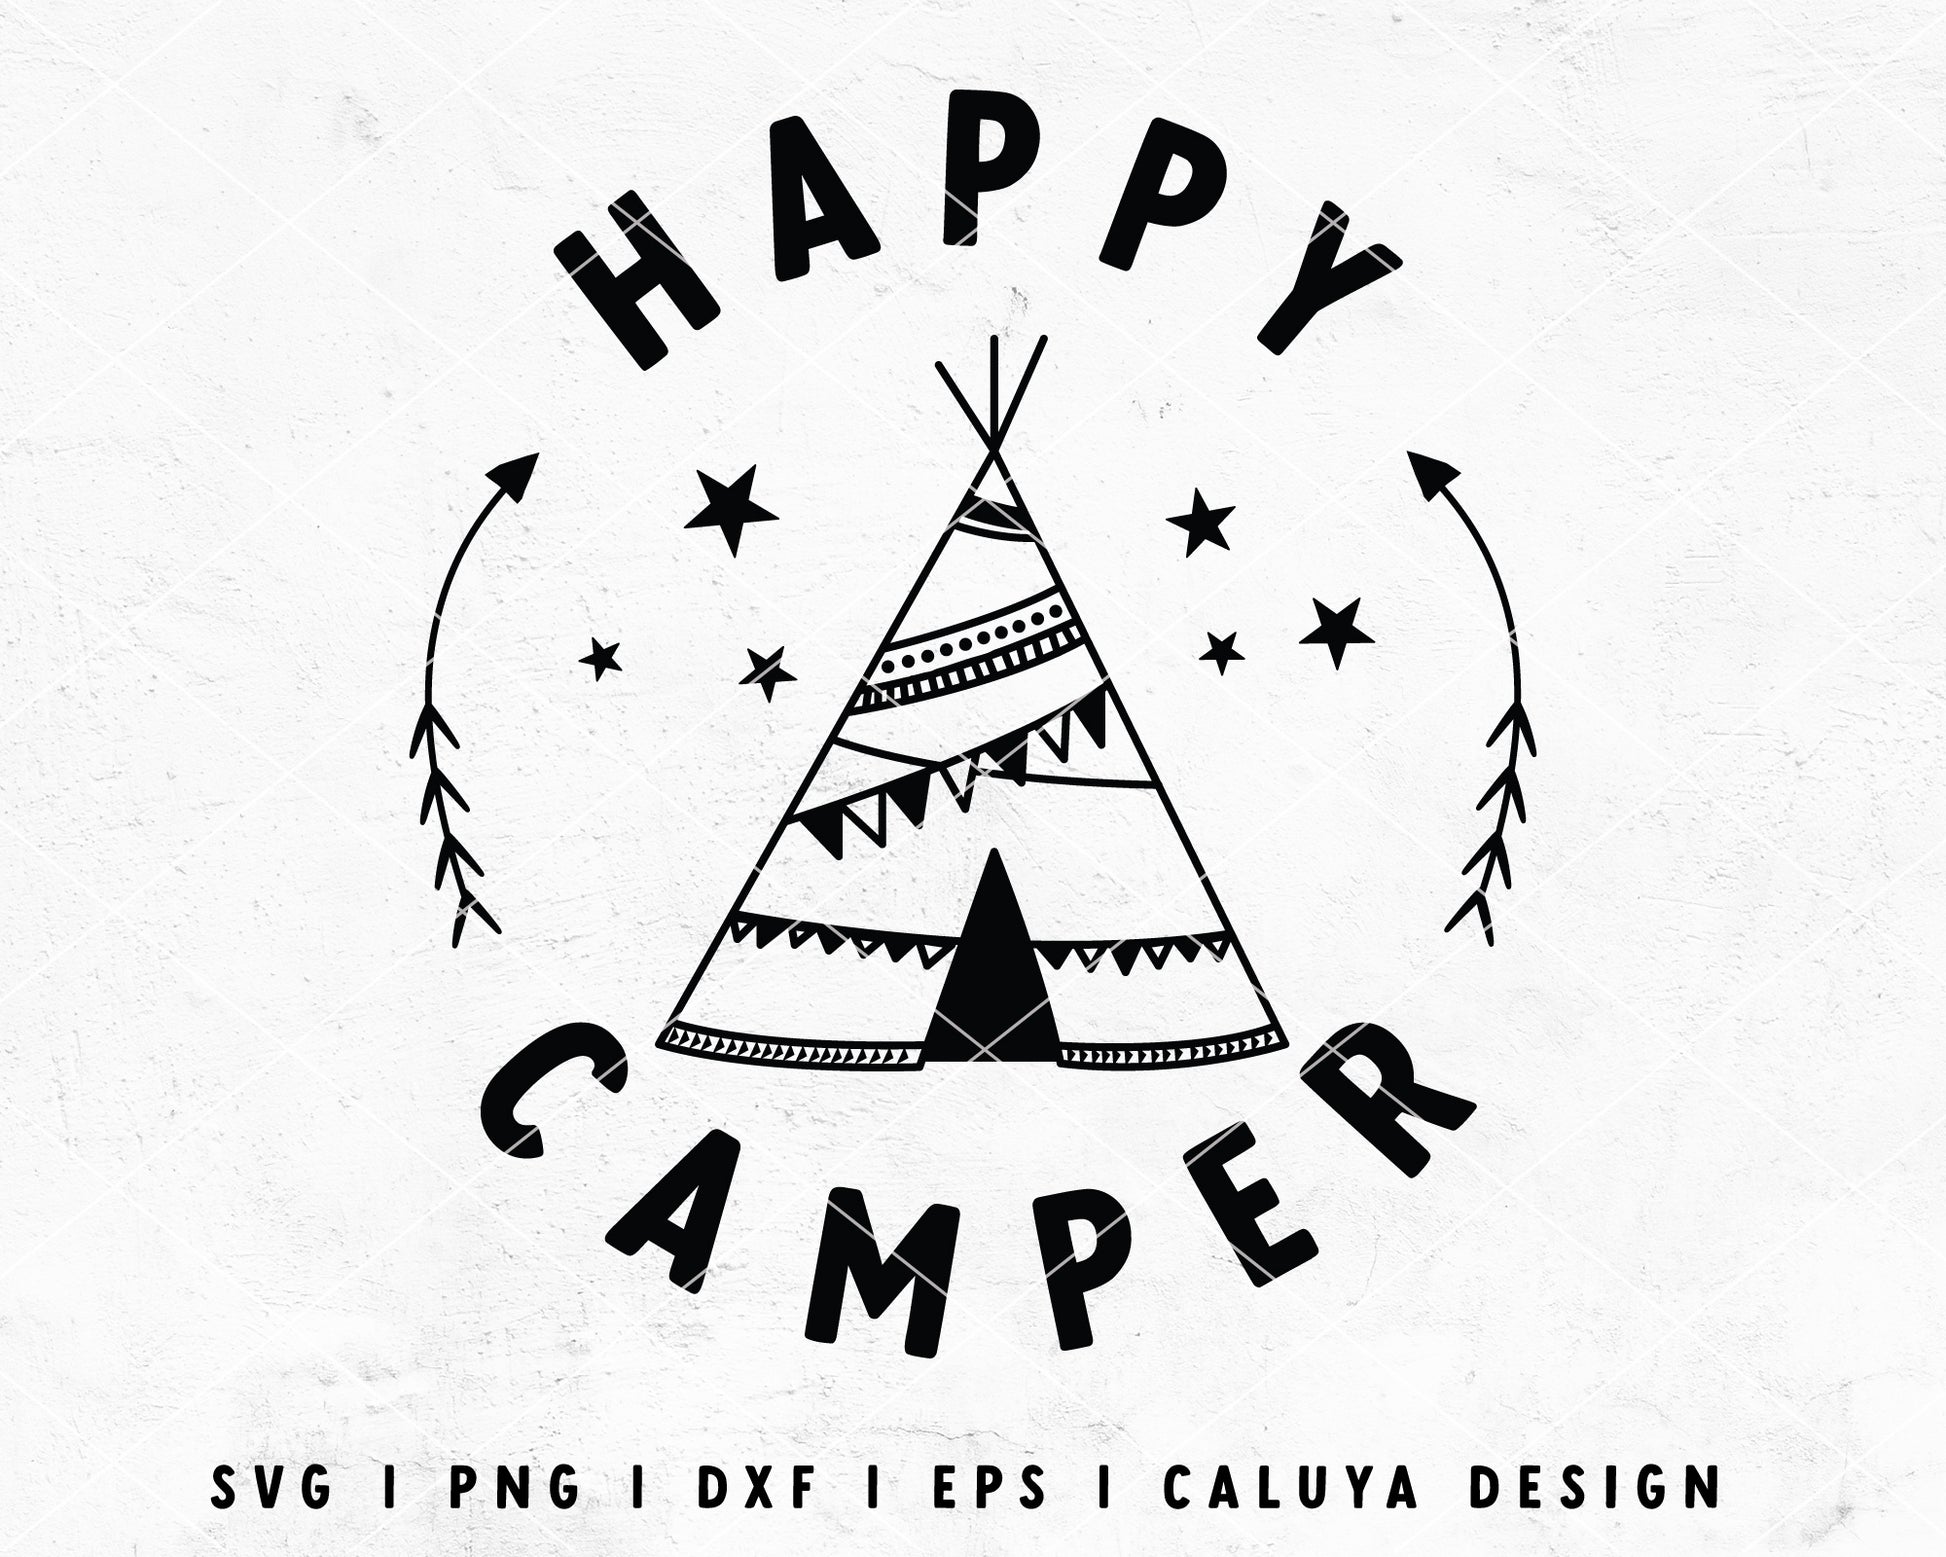 FREE Happy Camper SVG | Camping SVG Cut File for Cricut, Cameo Silhouette | Free SVG Cut File